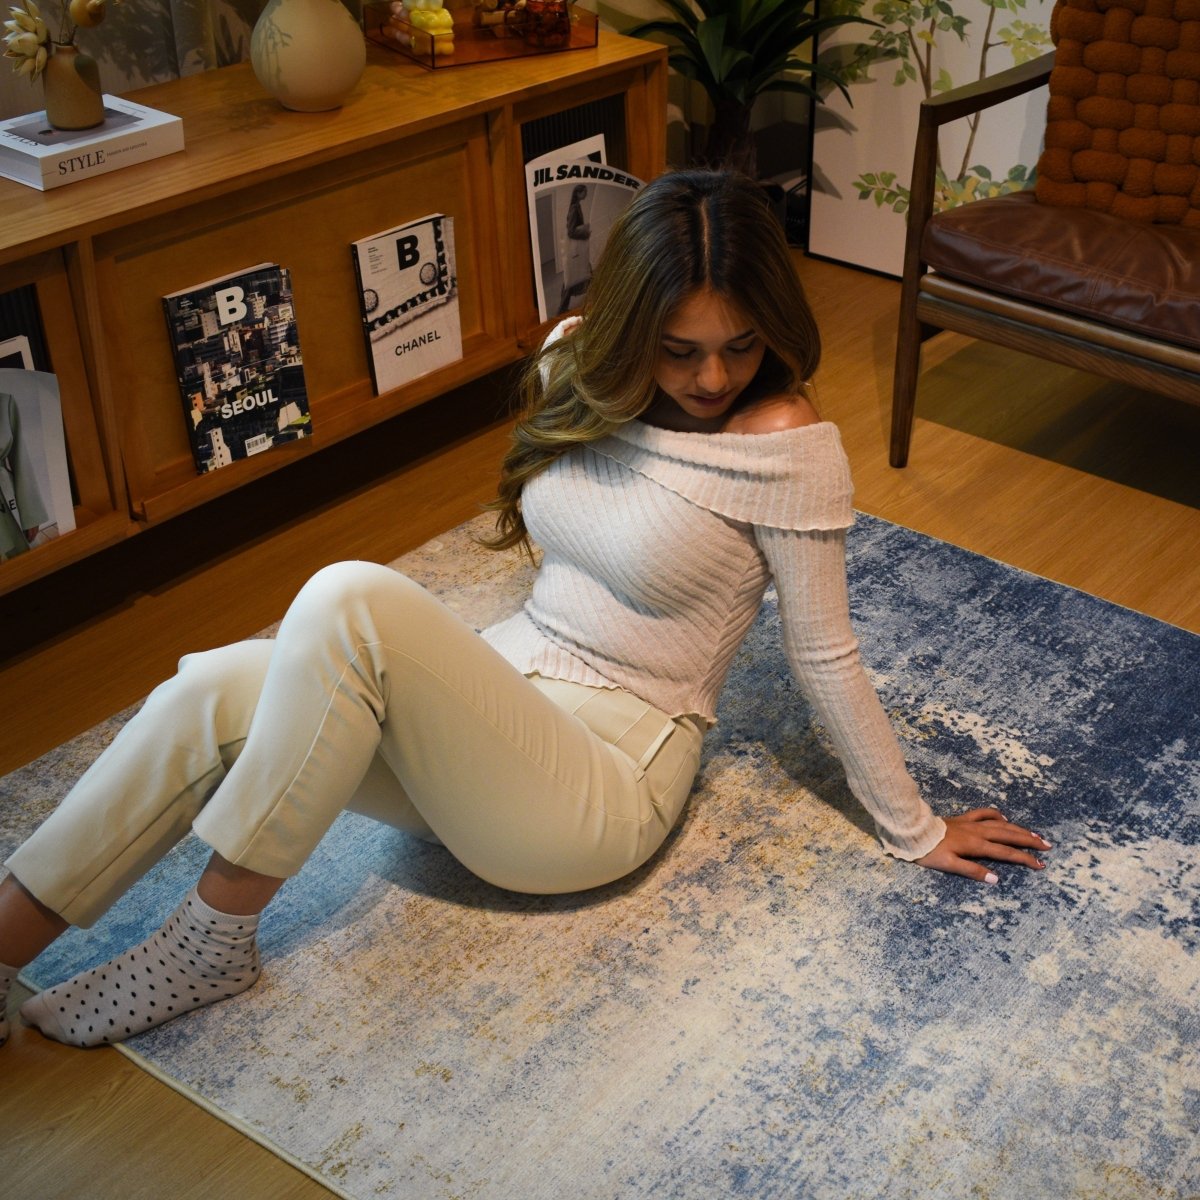 S-4368 Scandinavian Carpet | Polyfibre Cashmere Series - The Carpetier™